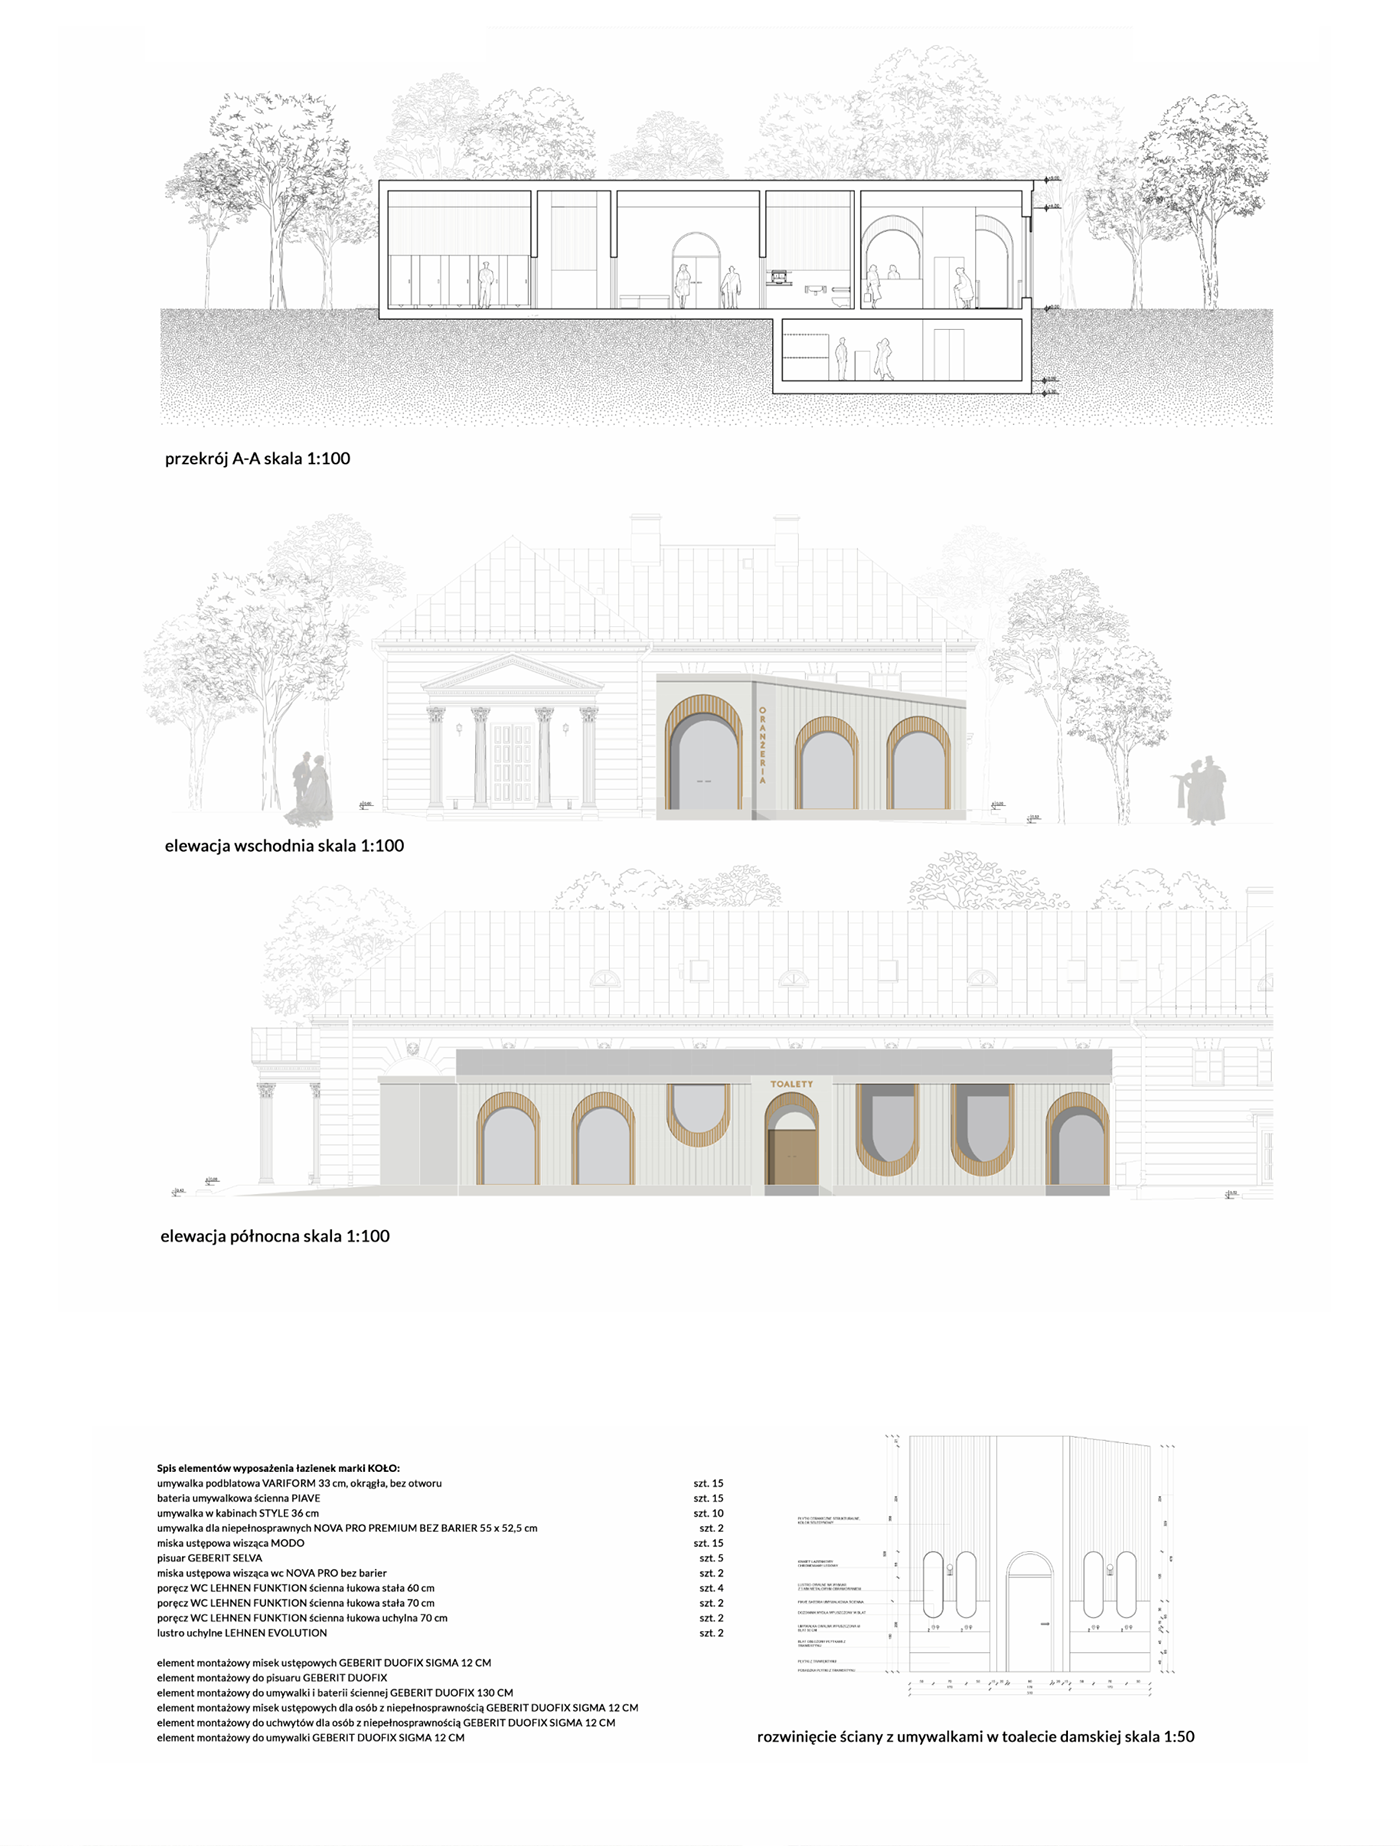 design architecture Competition visualization exterior 3D